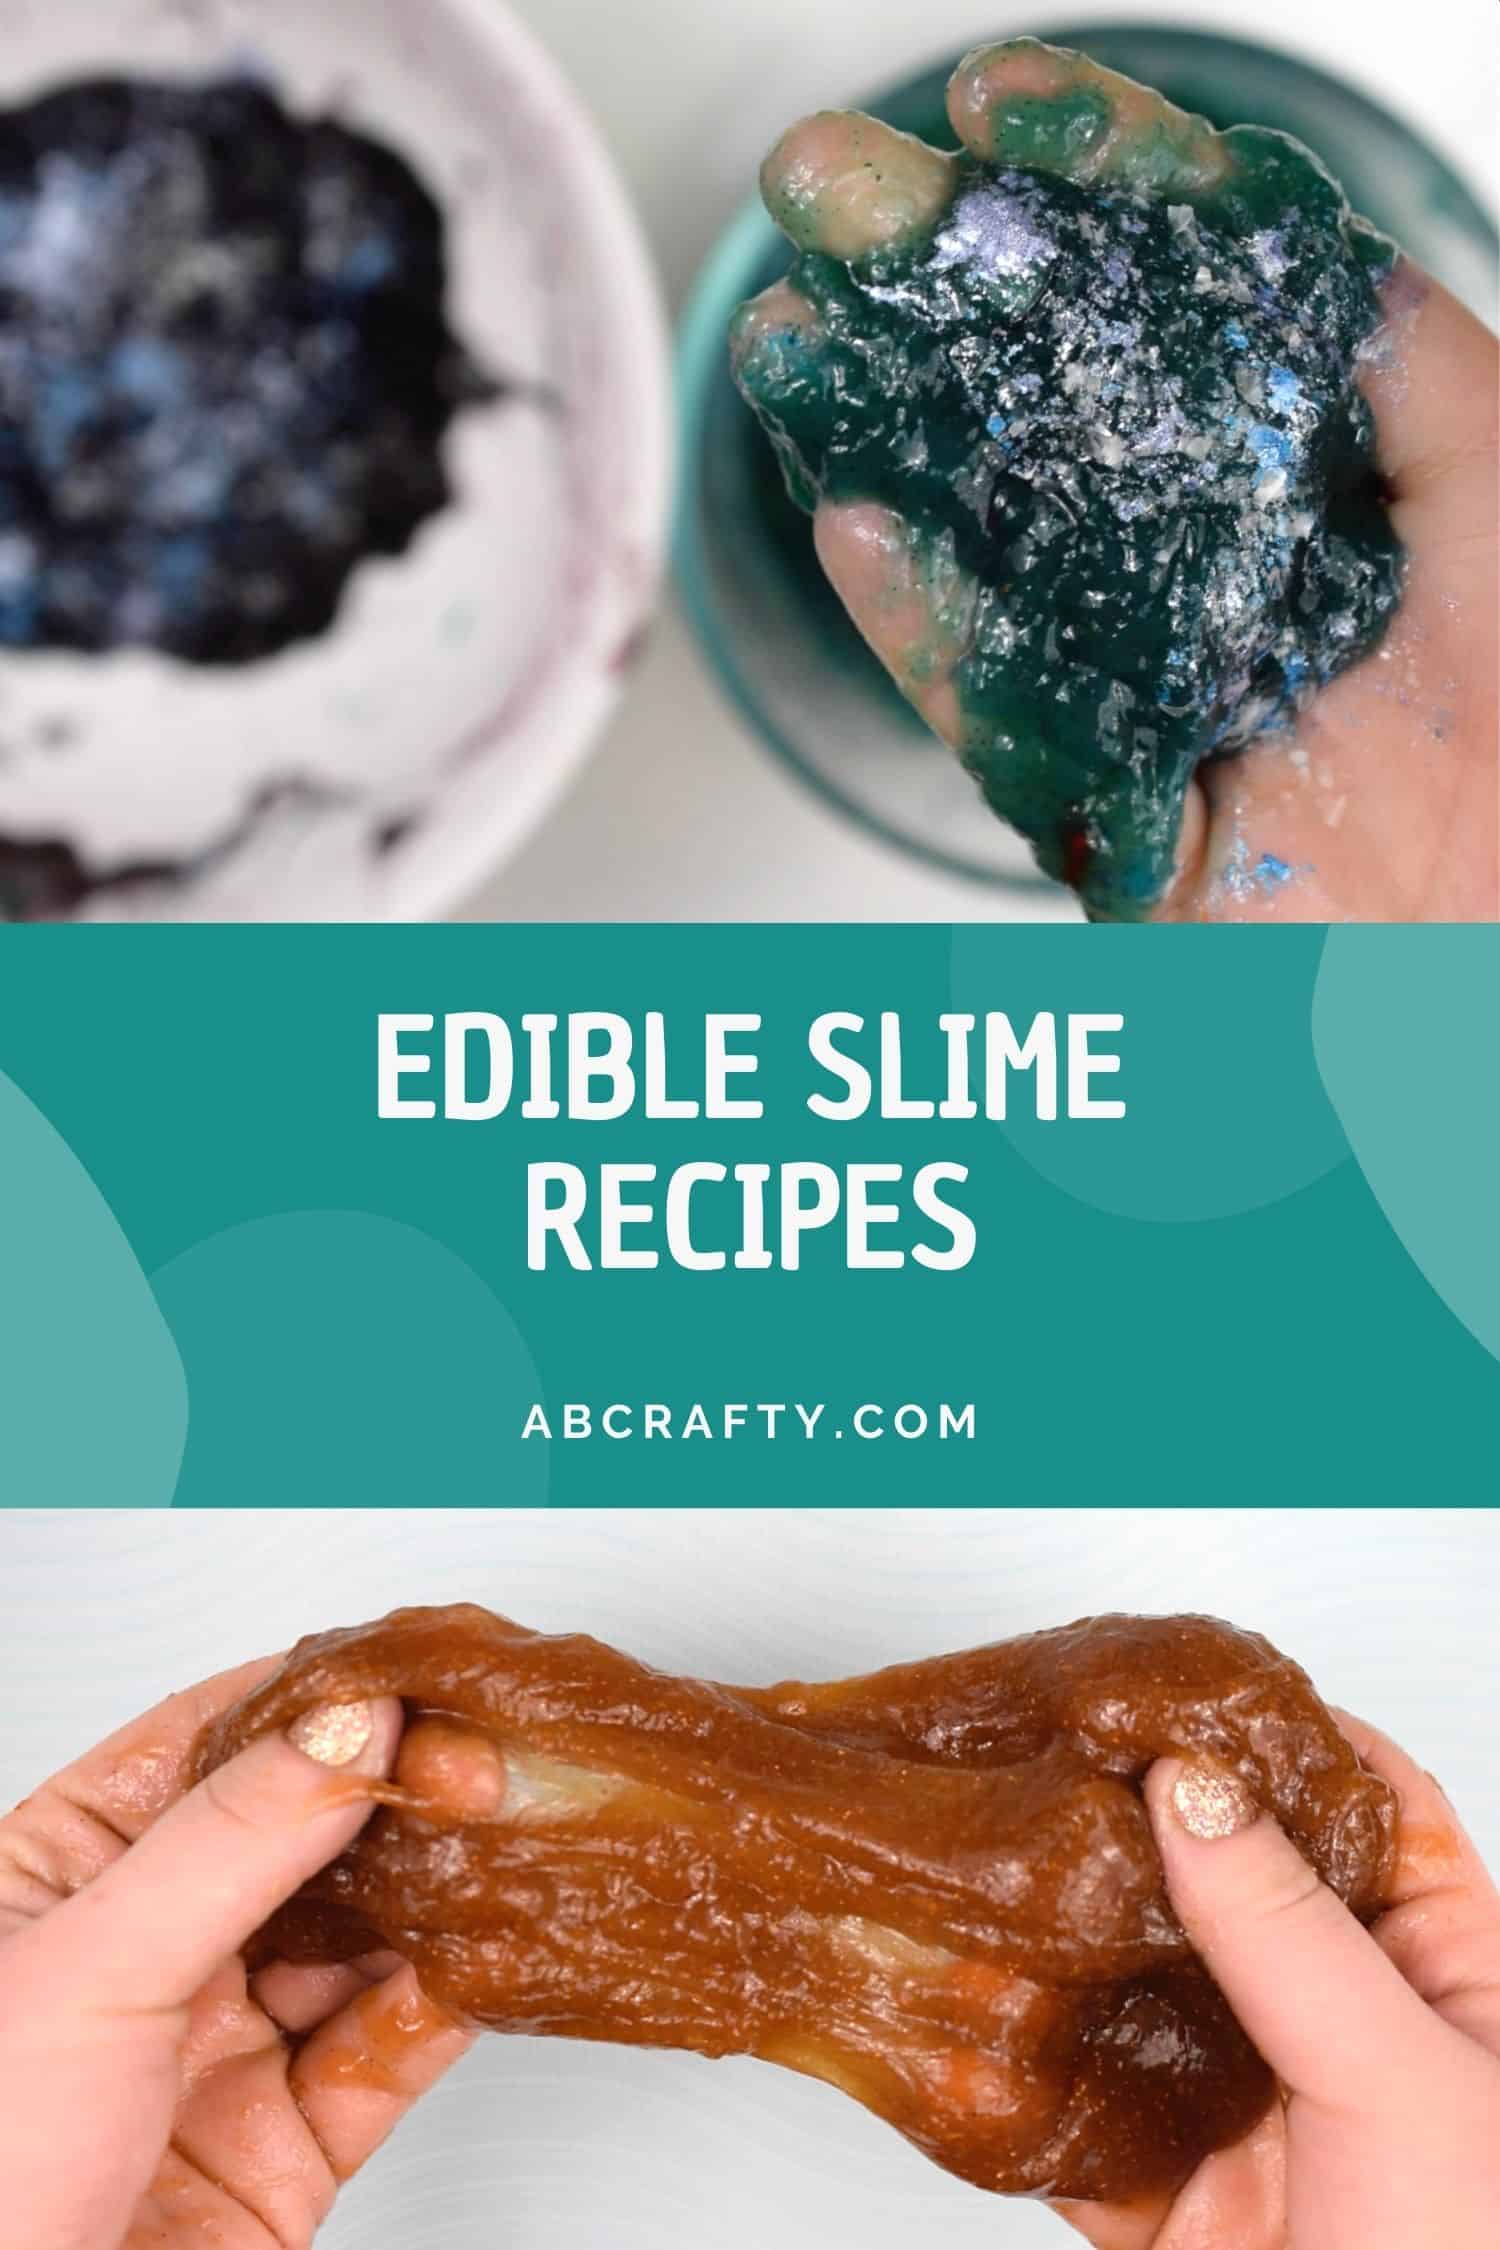 Slime Recipes